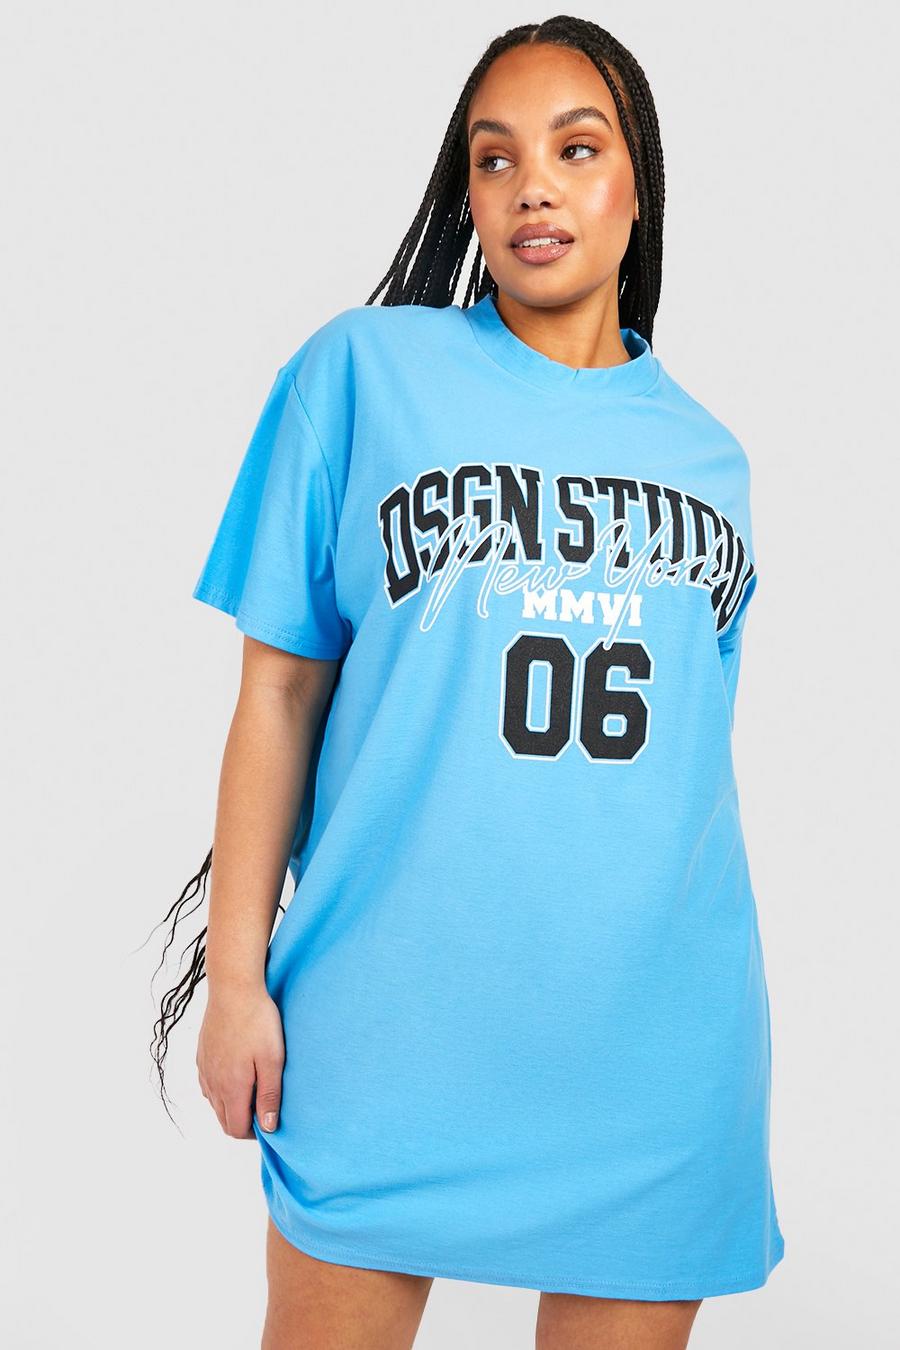 Grande taille - Robe t-shirt à slogan Dsgn Studio, Blue